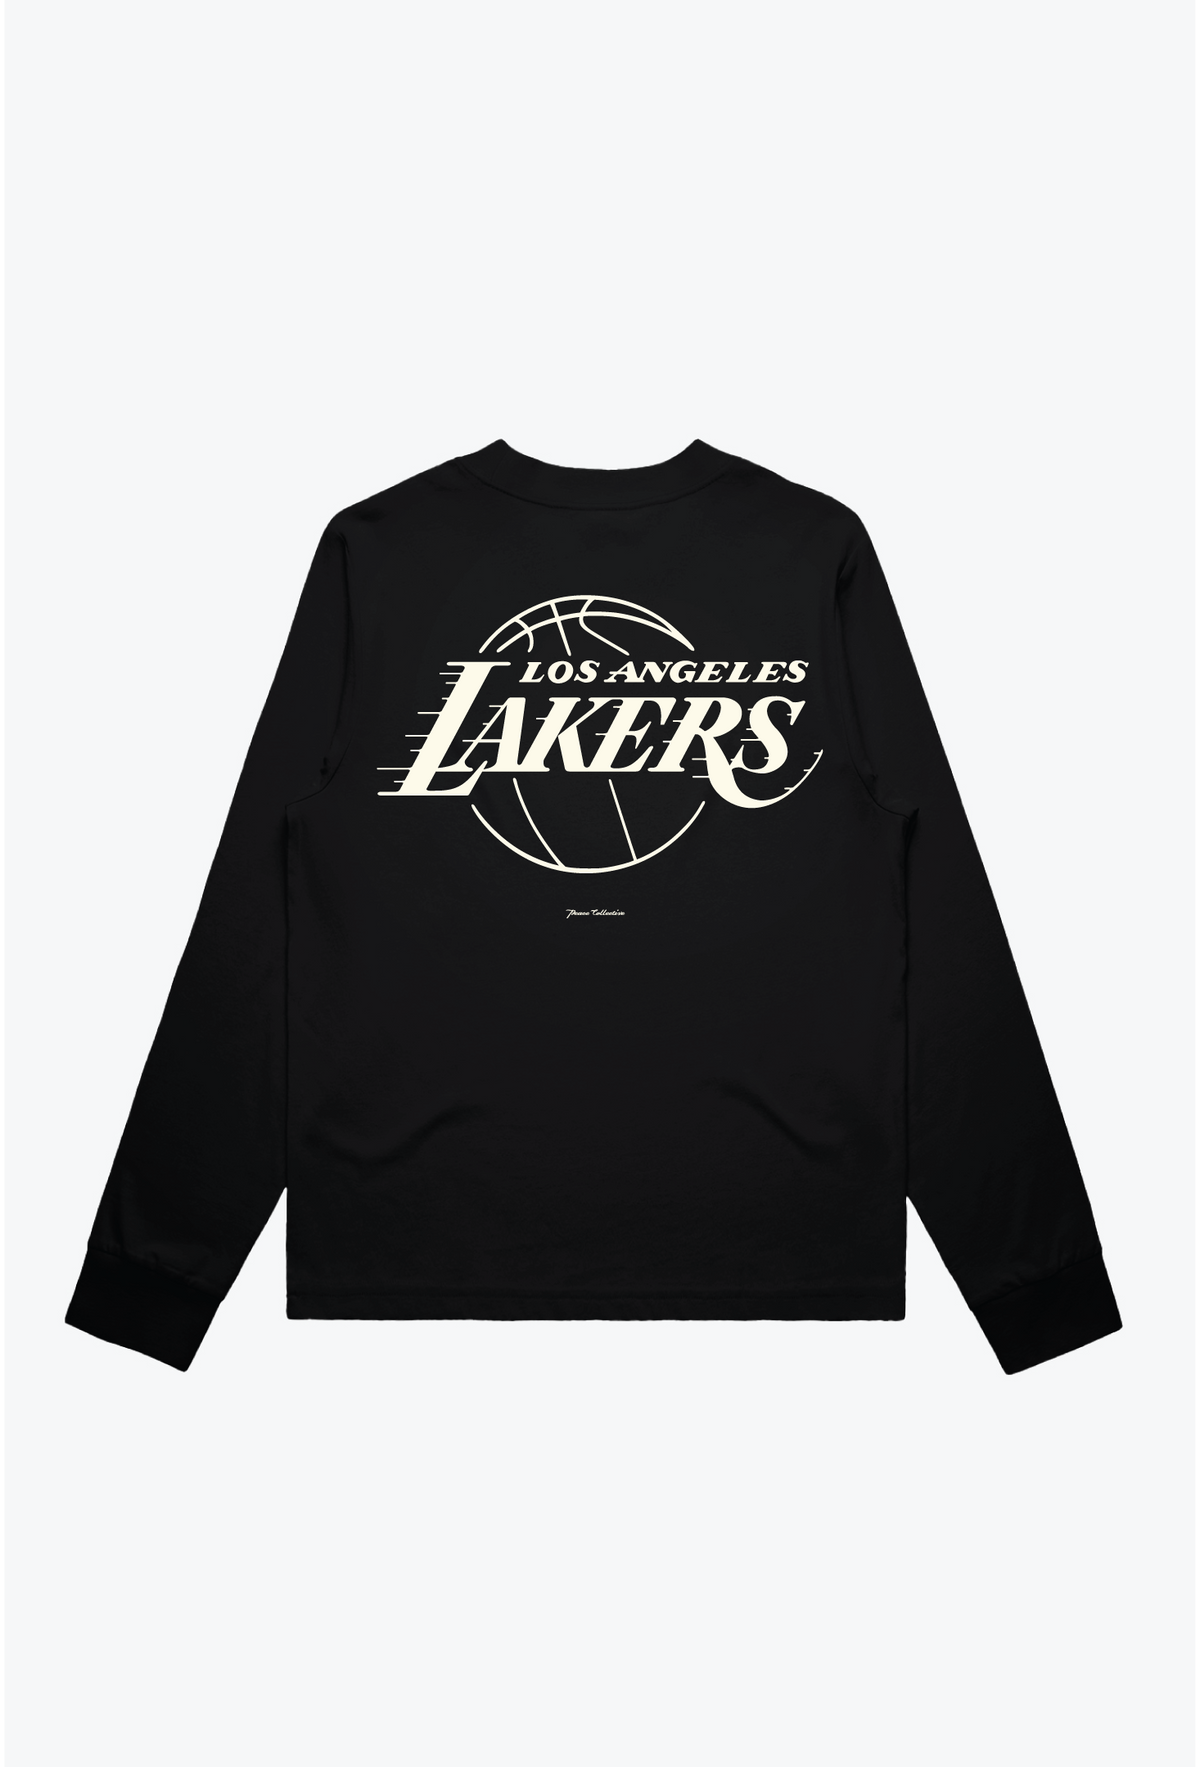 Los Angeles Lakers Women's Mock Long Sleeve - Black